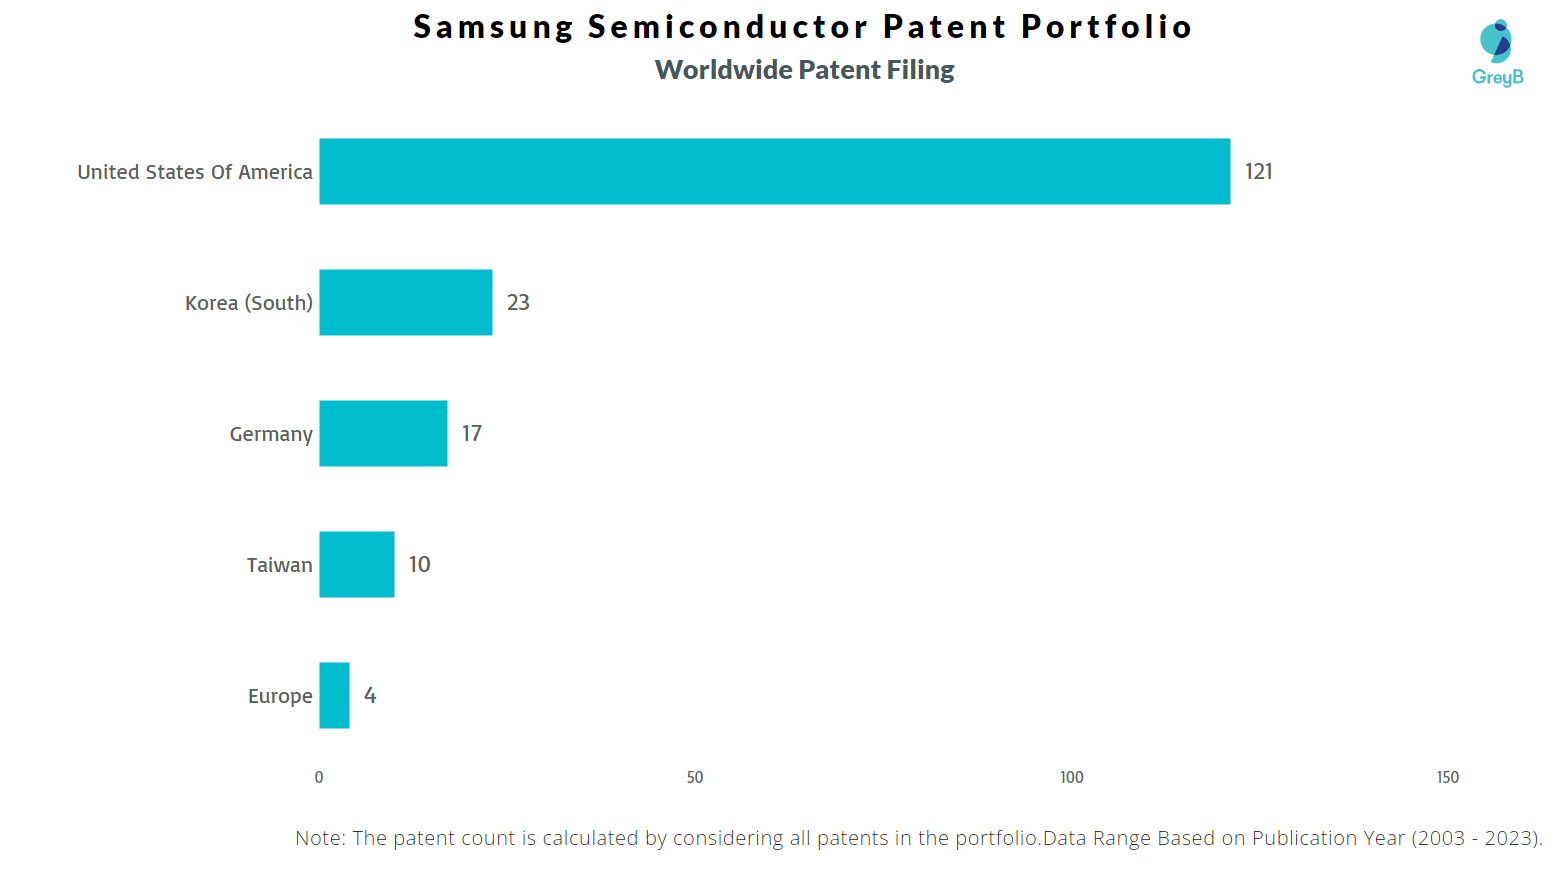 Samsung Semiconductor Worldwide Patent Filing